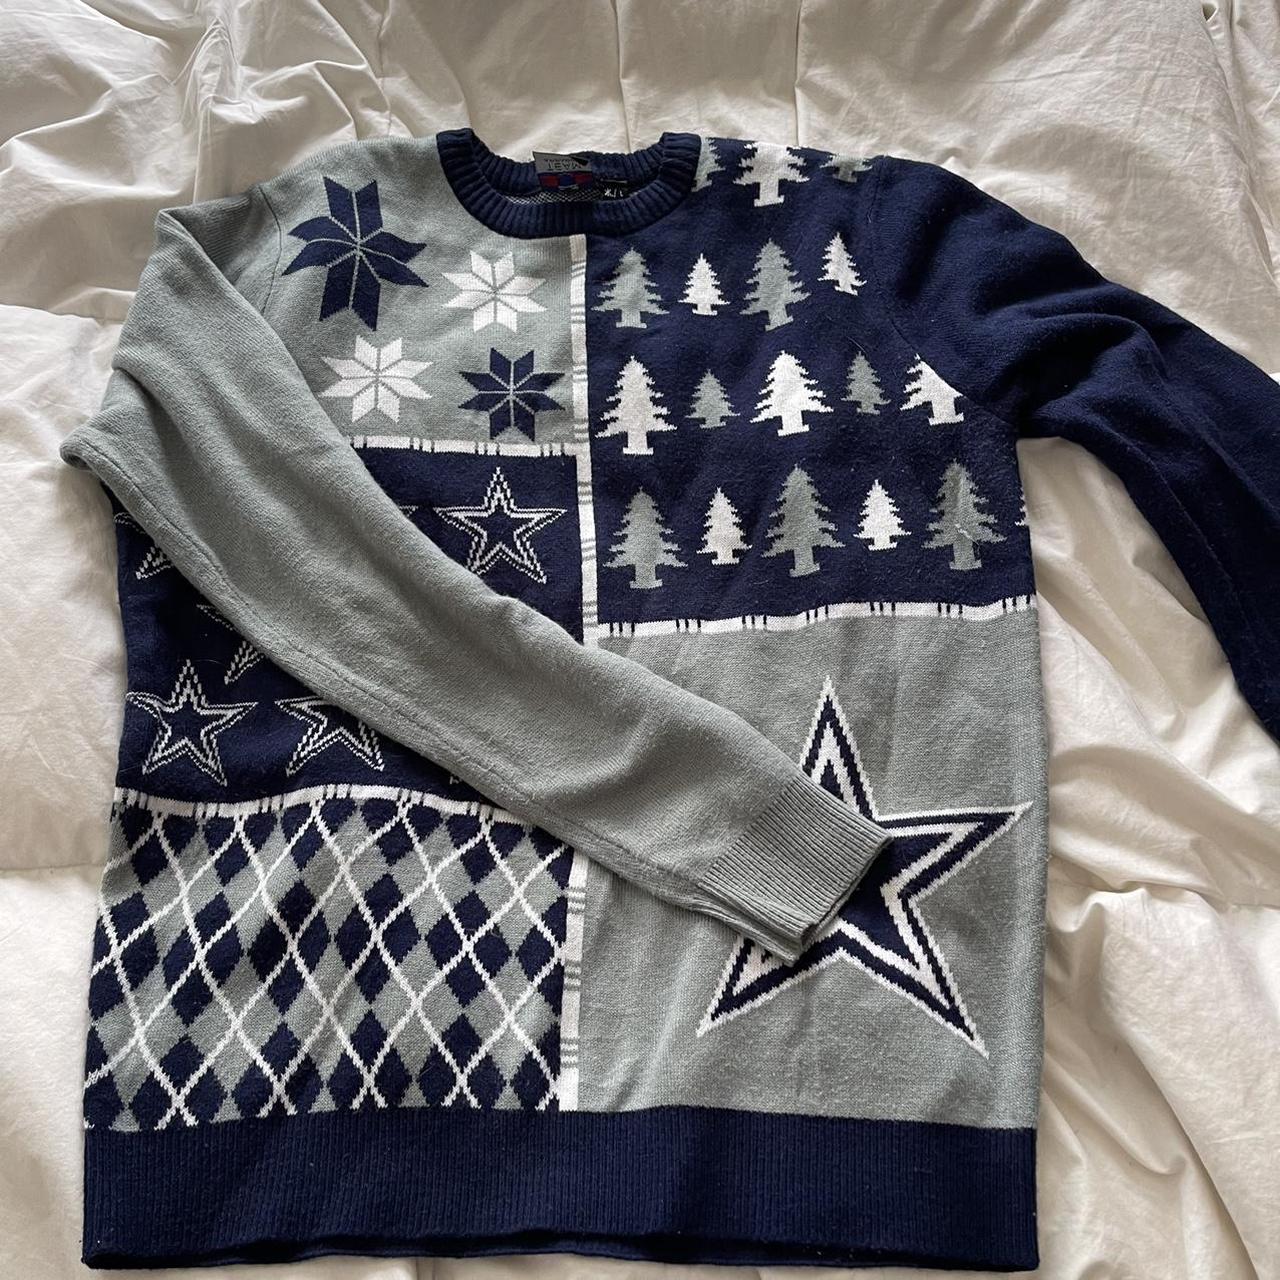 Christmas Dallas Cowboys sweater. Super soft and - Depop